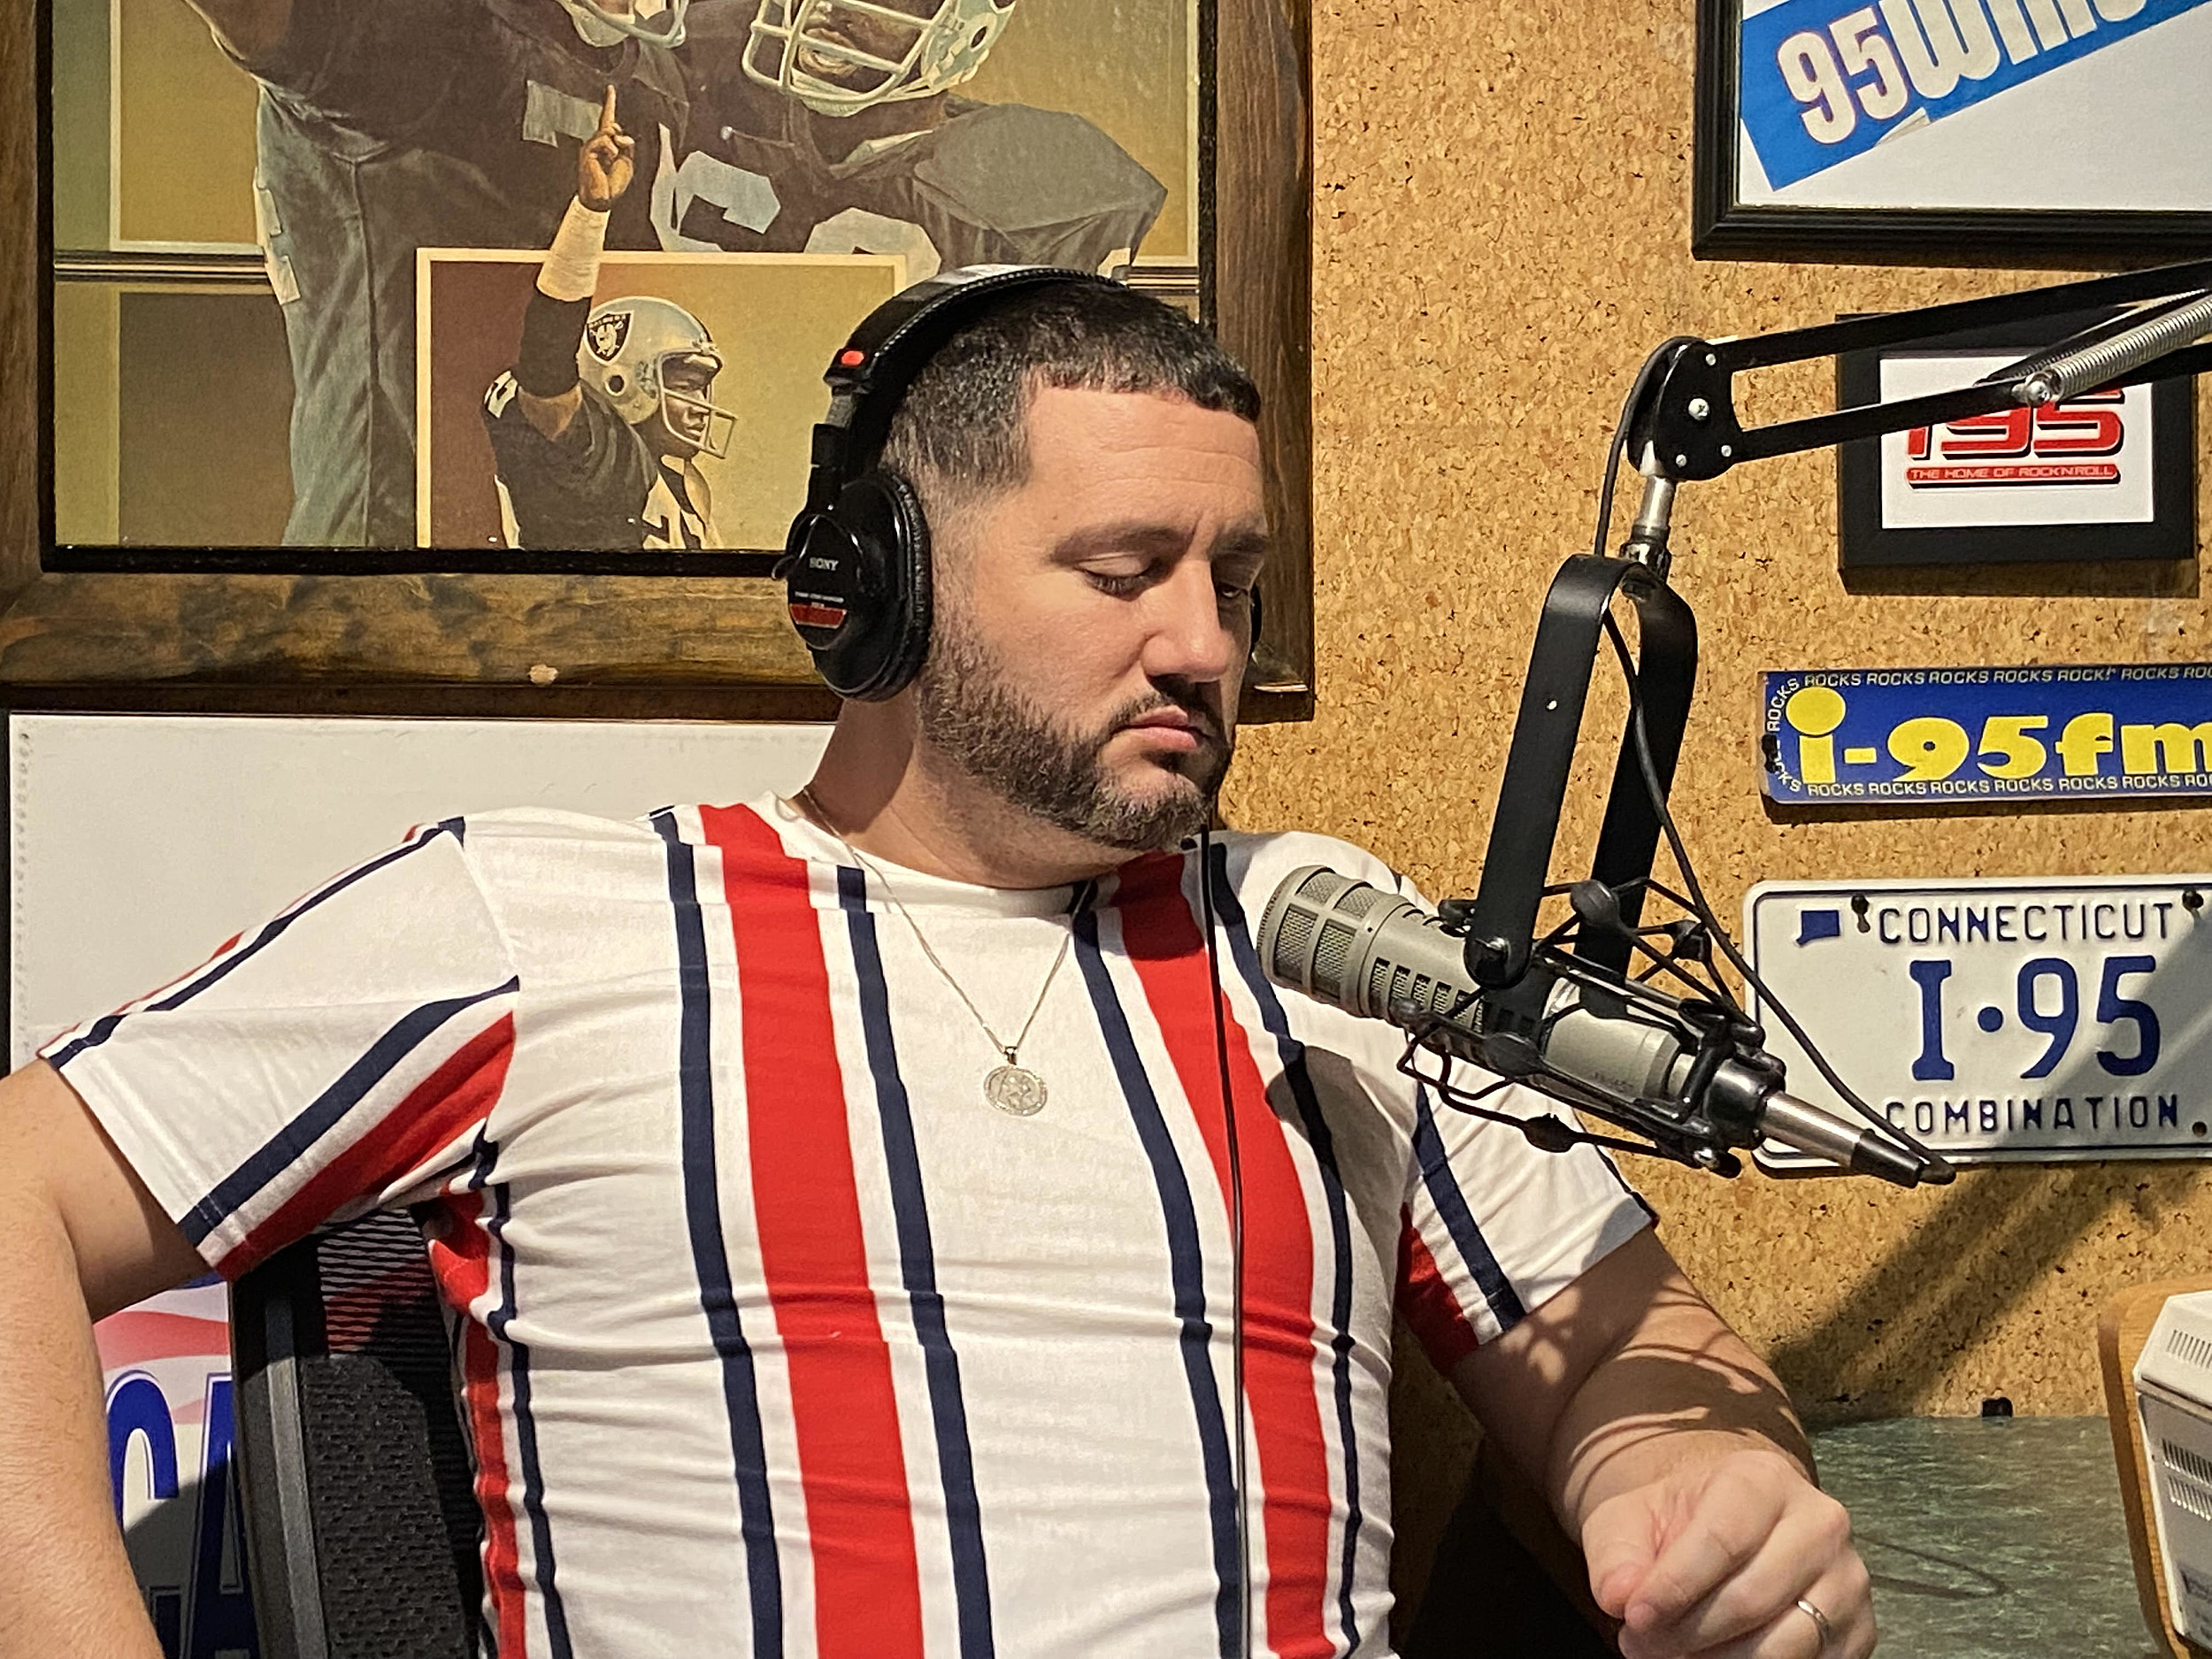 98: Danbury Trashers GM - AJ Galante, The Hockey Podcast Network, Podcasts on Audible